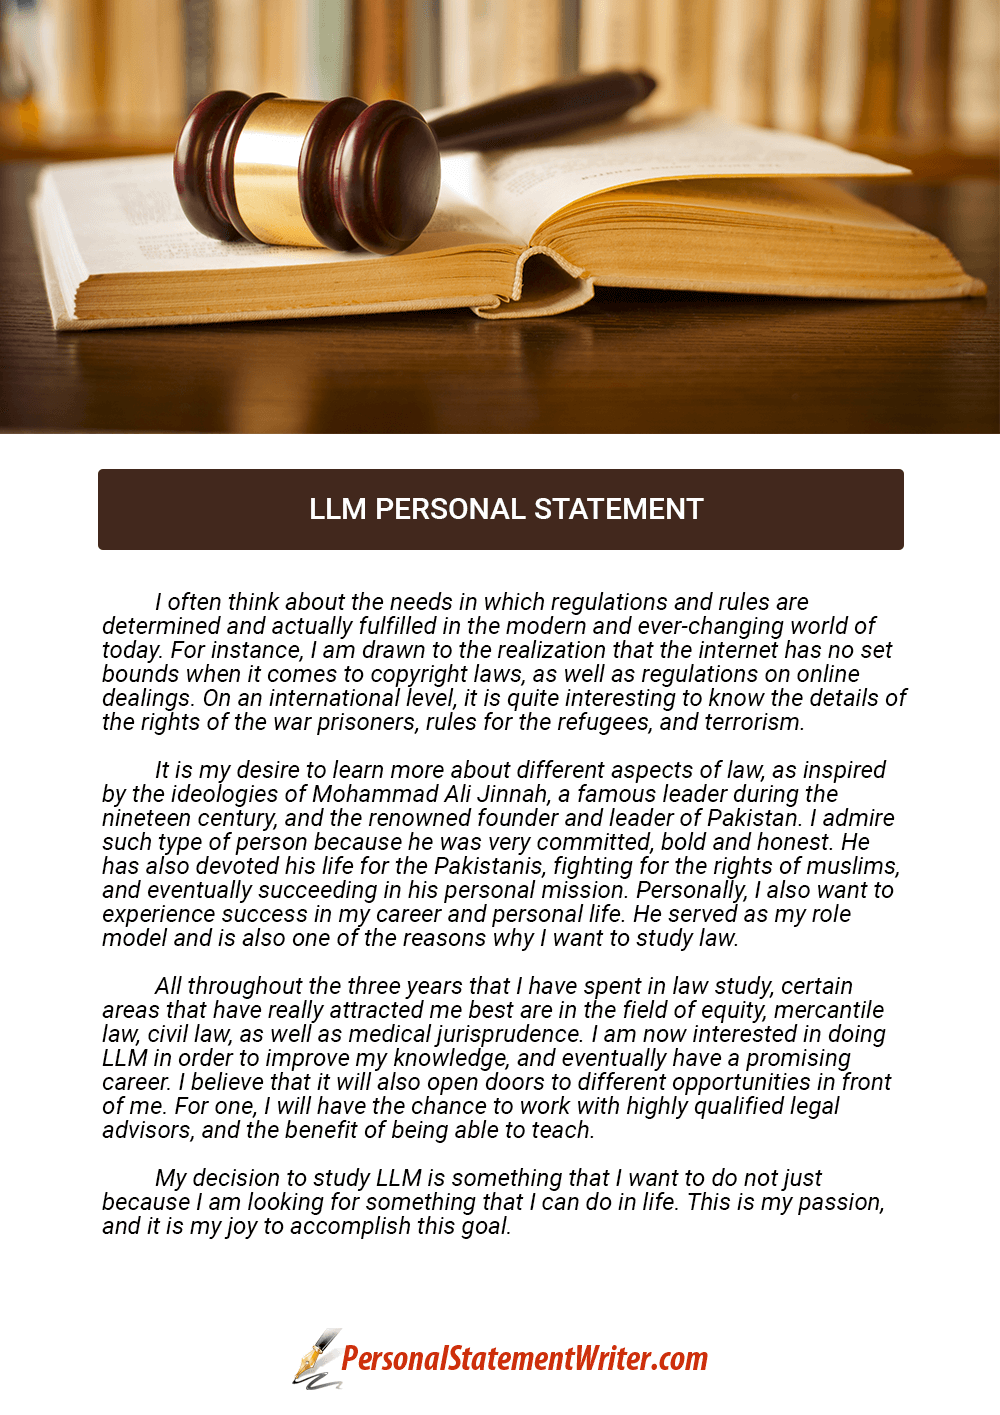 stanford law school personal statement reddit